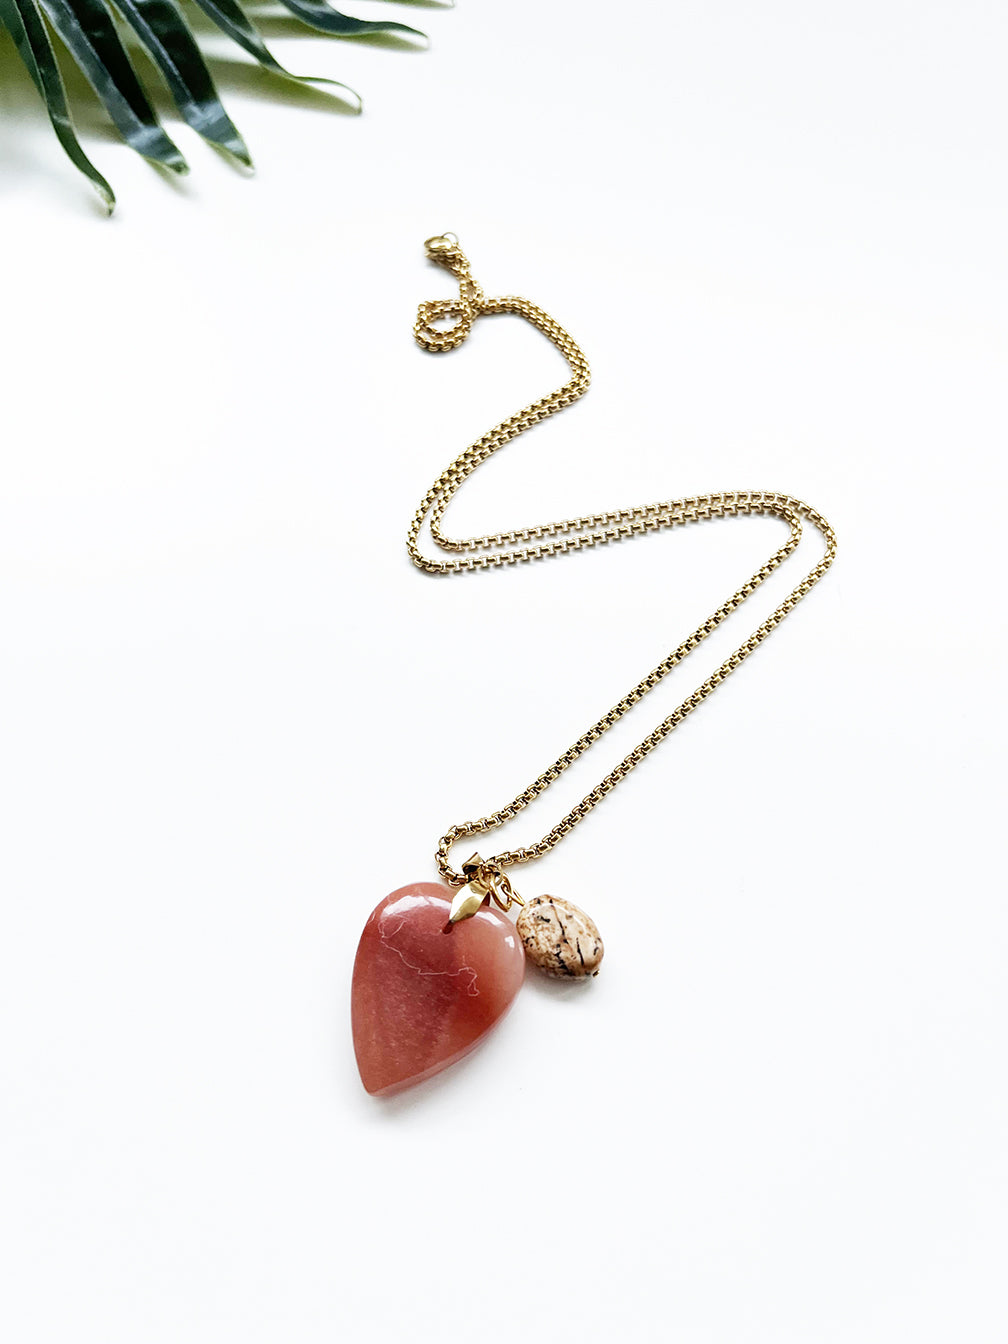 touchstone necklace - peach aventurine and picture jasper